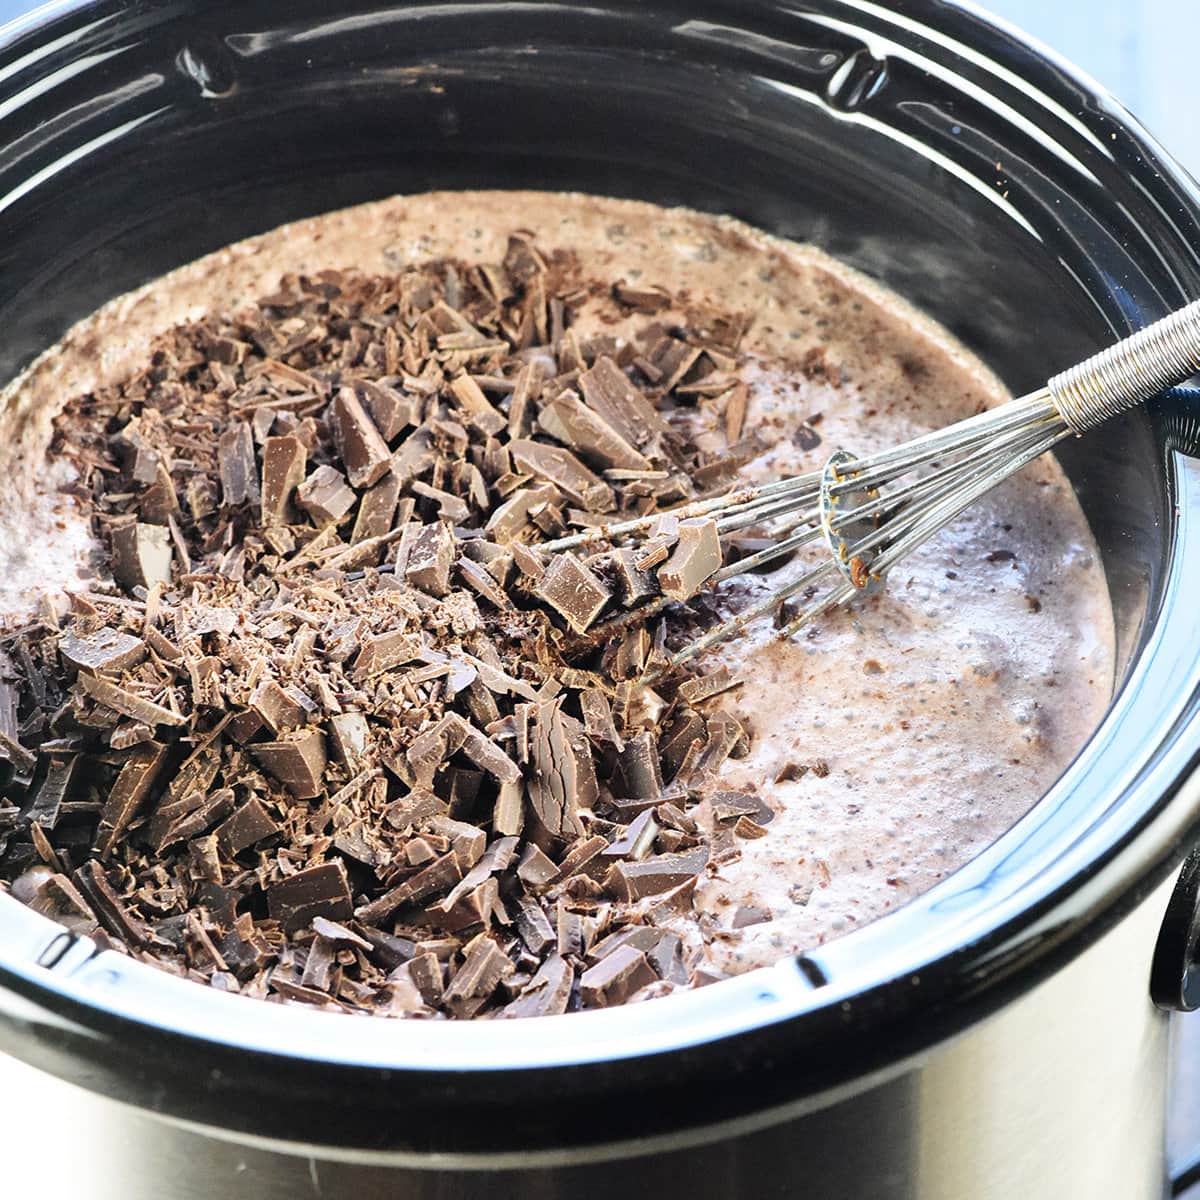 Easy Instant Pot Hot Chocolate Recipe + Video